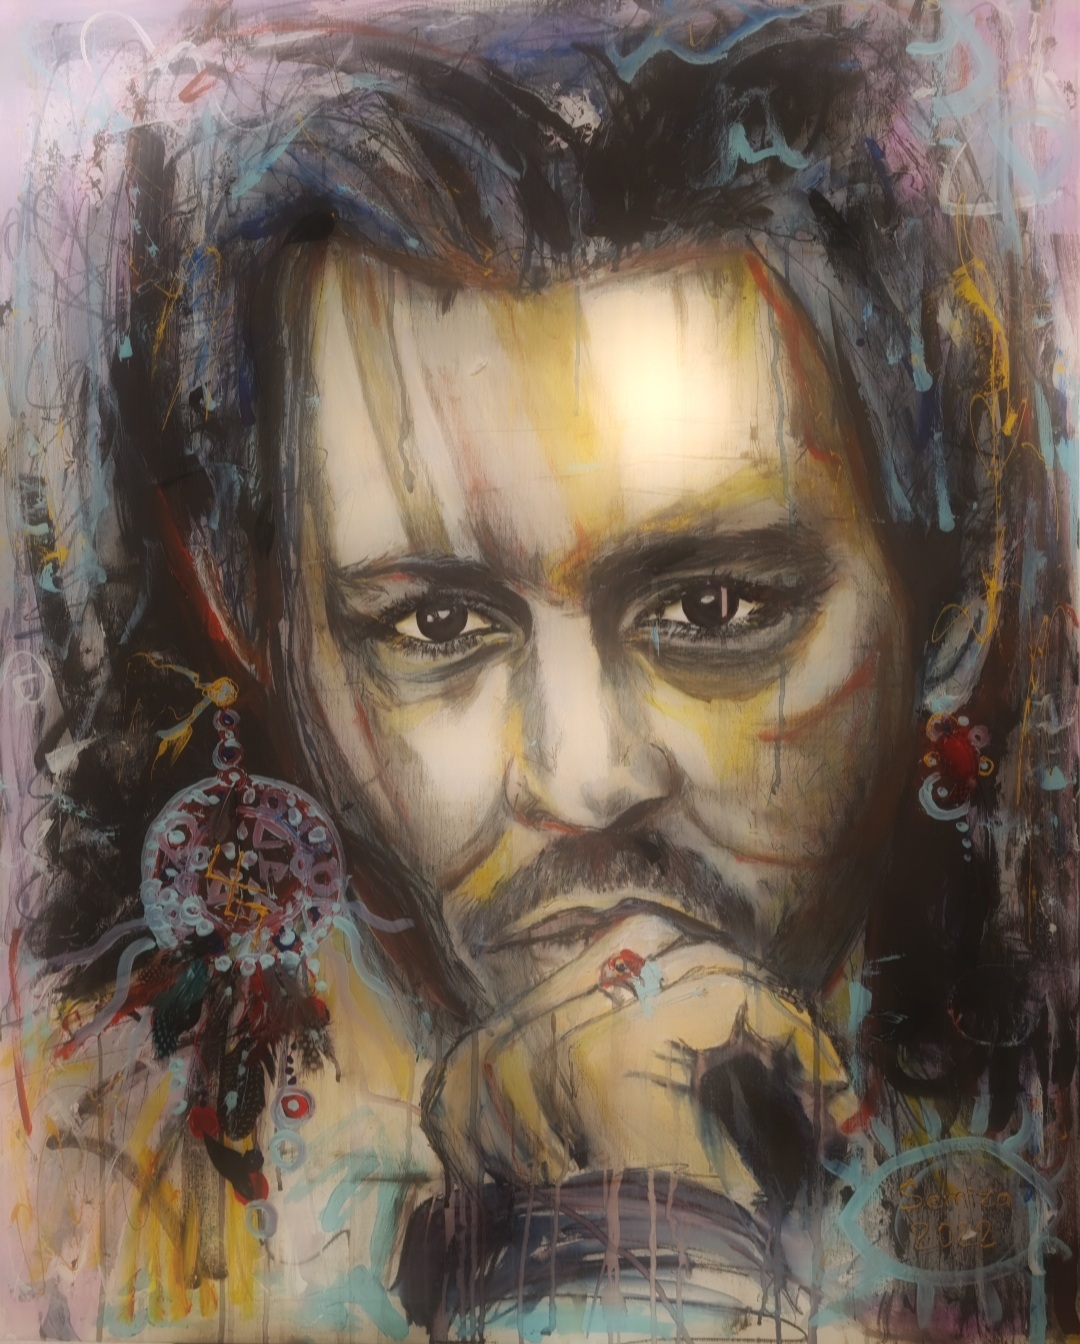 A new portrait of Johnny Depp by SEMIRA - an artist from Ukraine